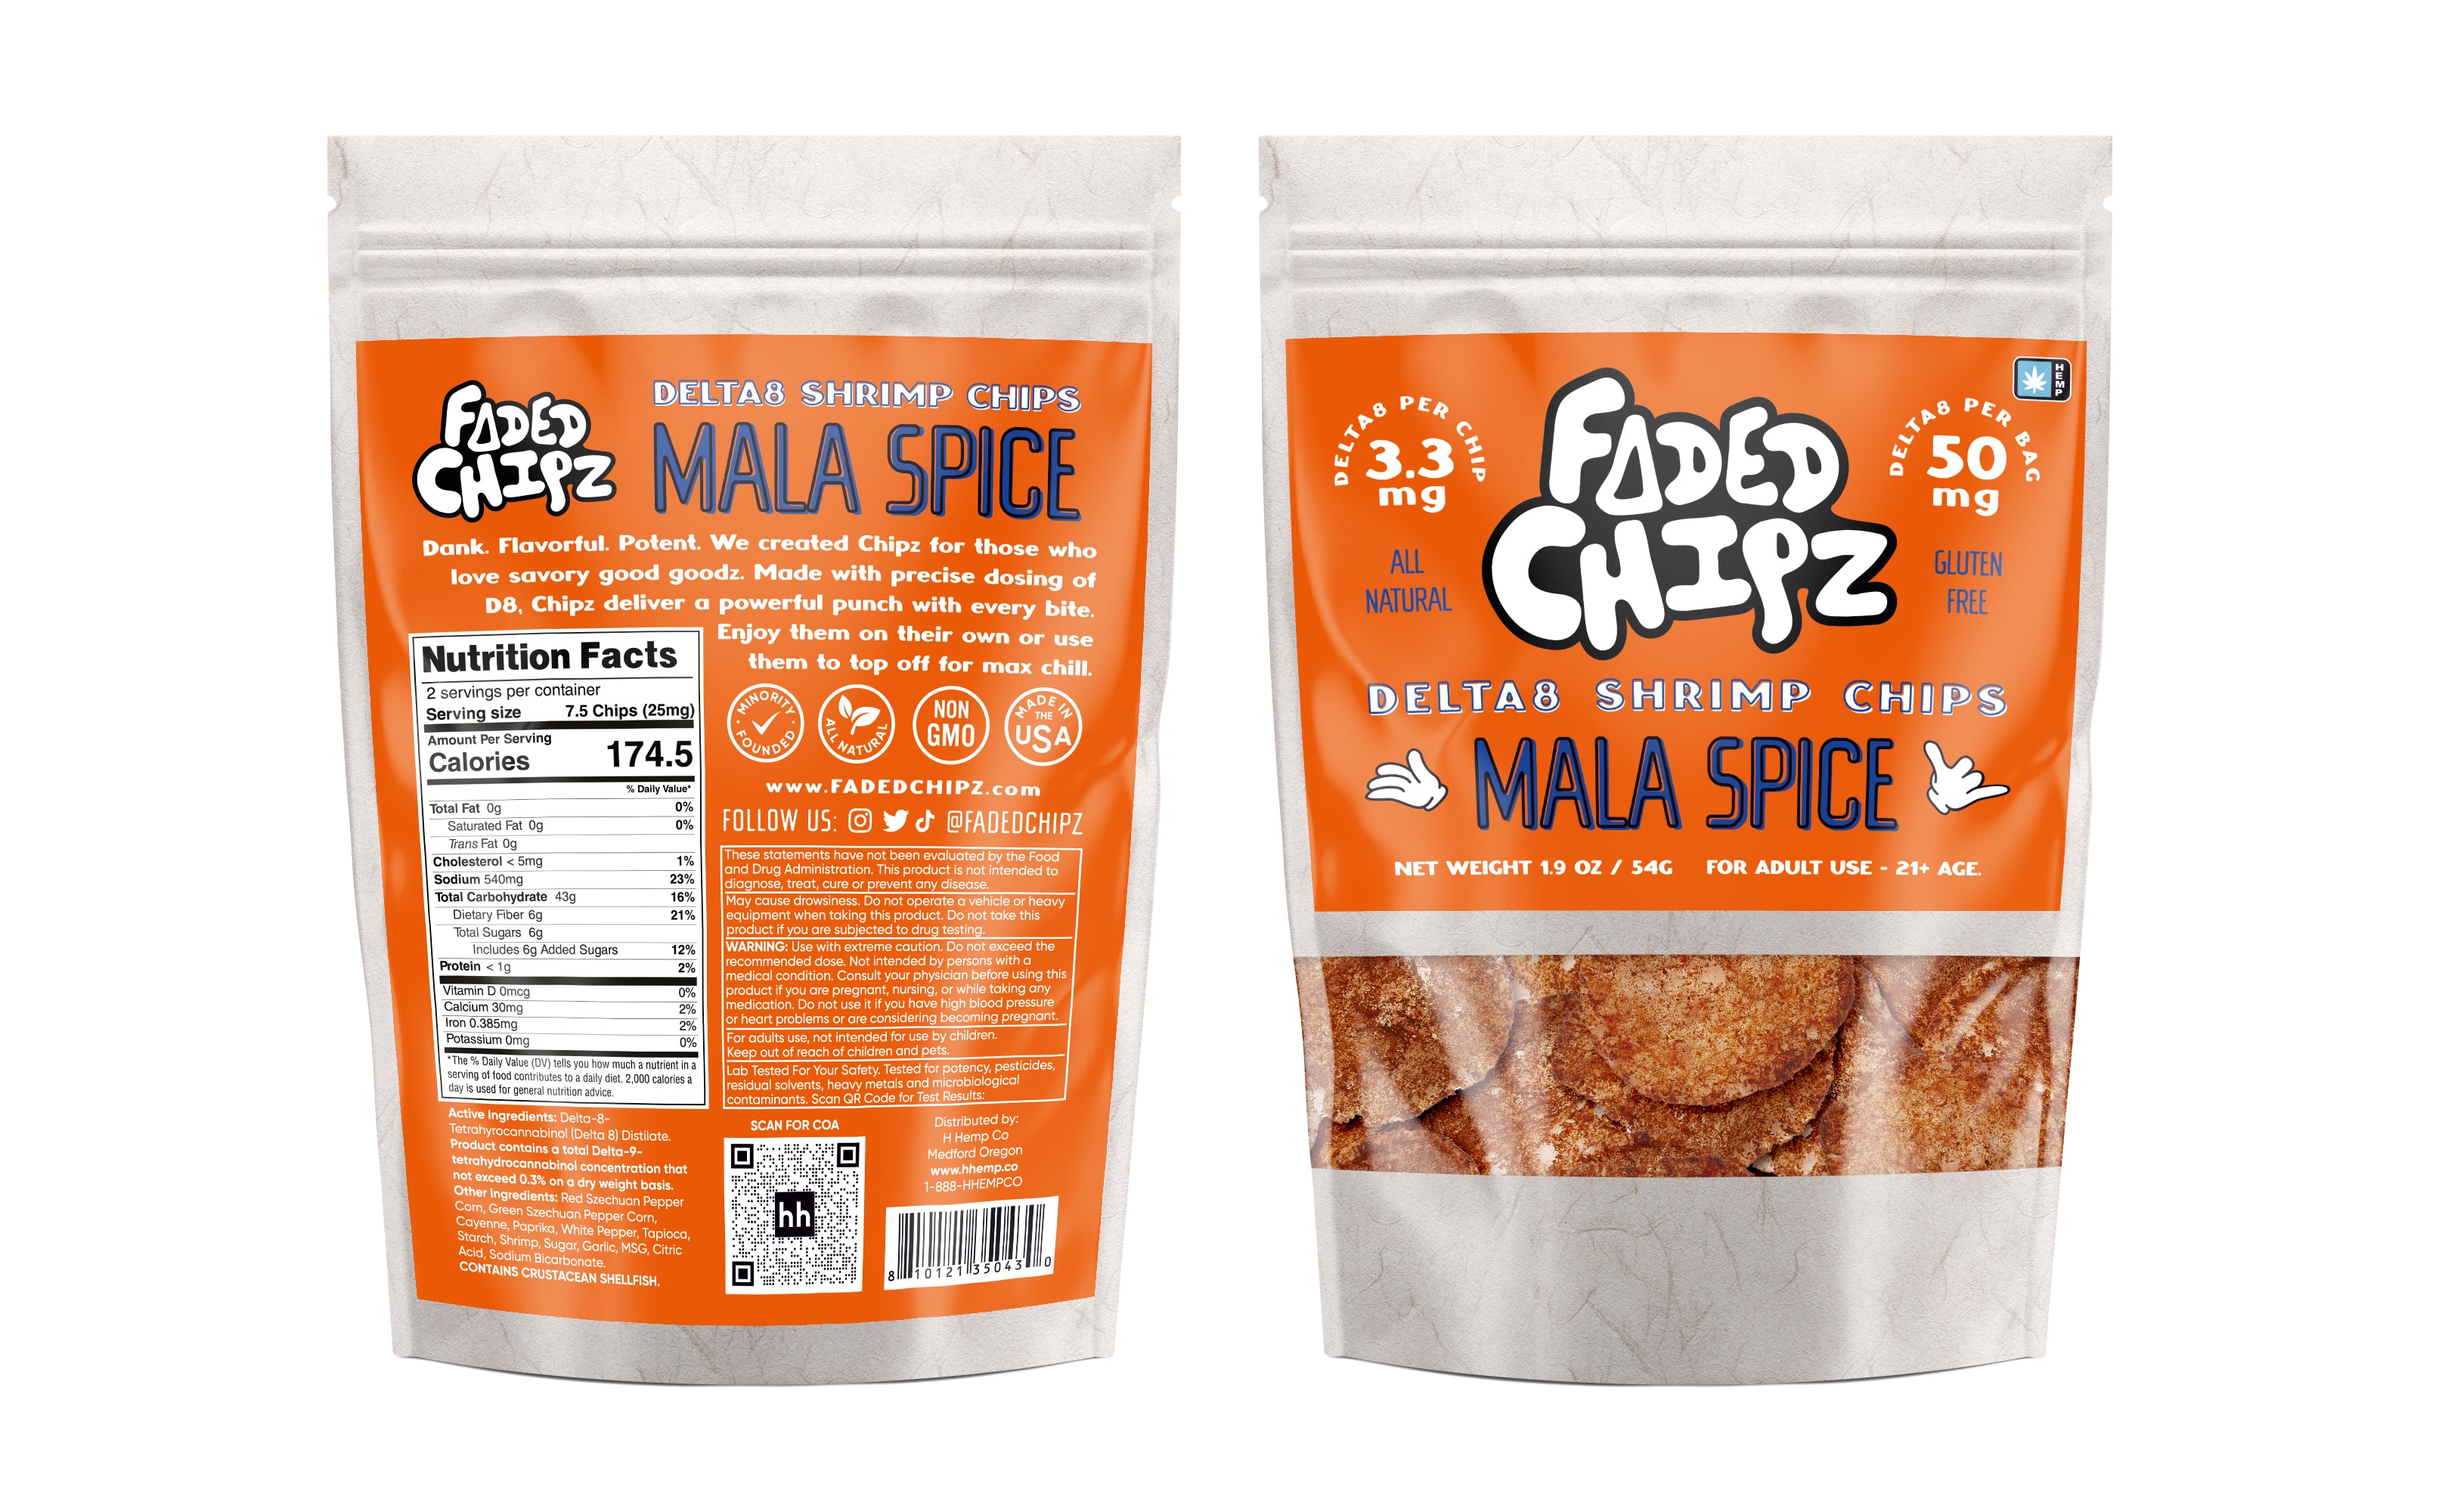 Faded Chipz Delta 8 Shrimp Chips 50mg - Mala Spice (25ct)